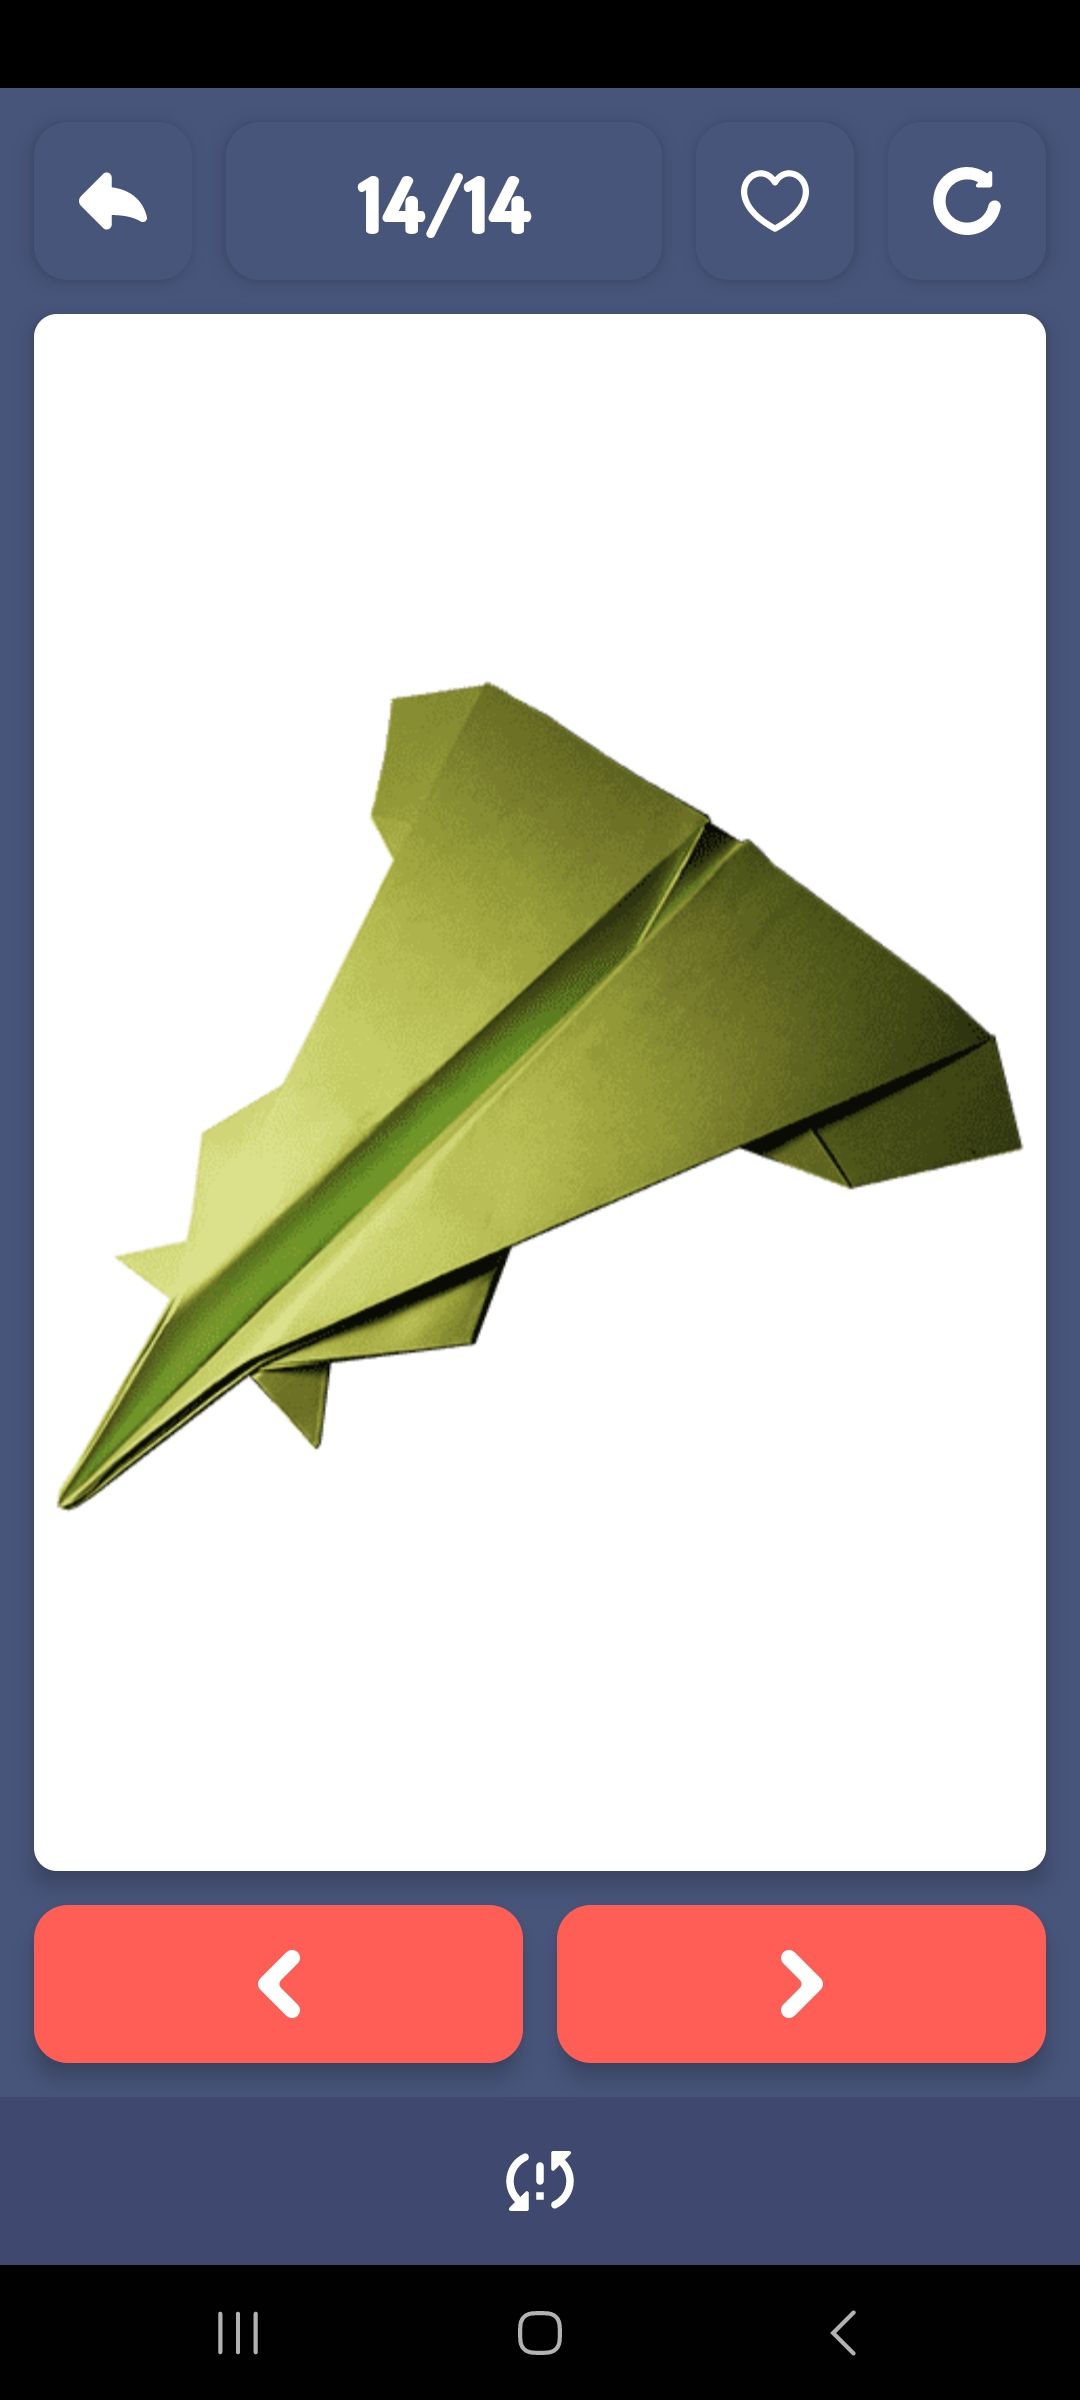 Origami aircraft star design